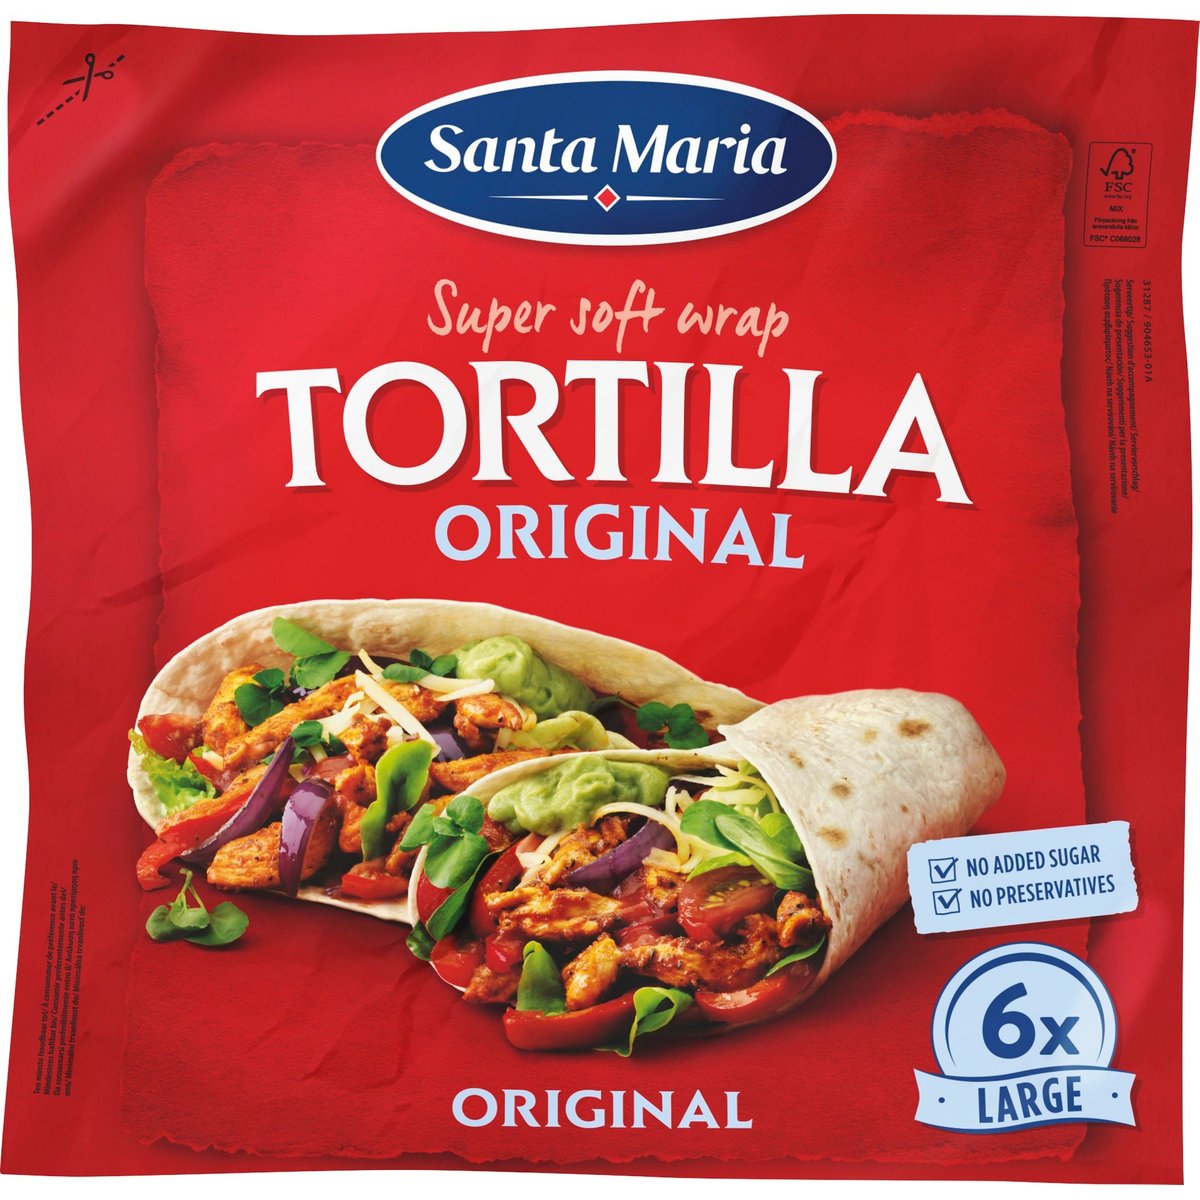 Santa Maria Tex Mex Original wrap pšeničná tortilla 24cm 6ks